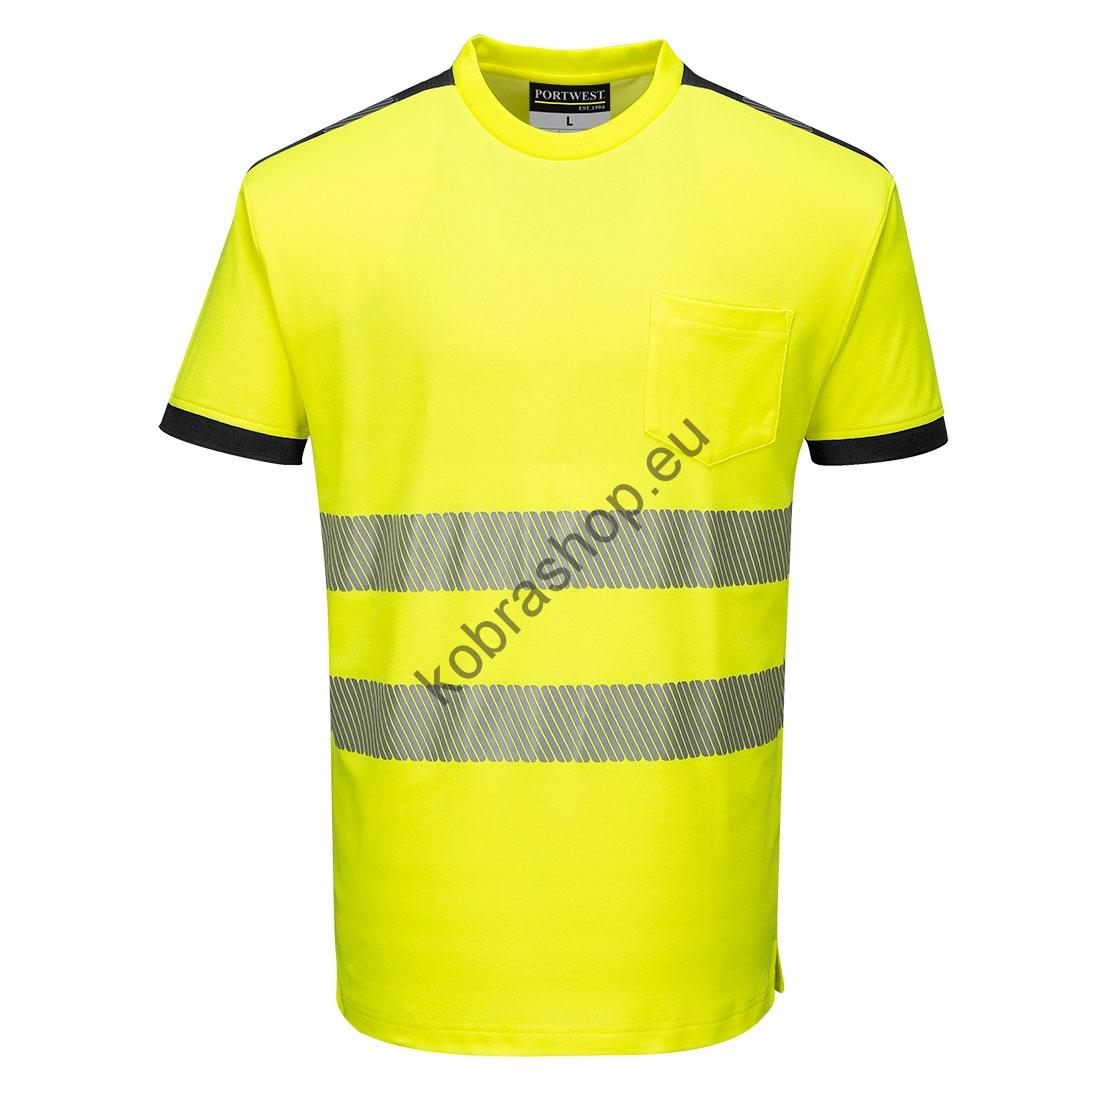 Portwest HI-VIS tričko PW3 žlté